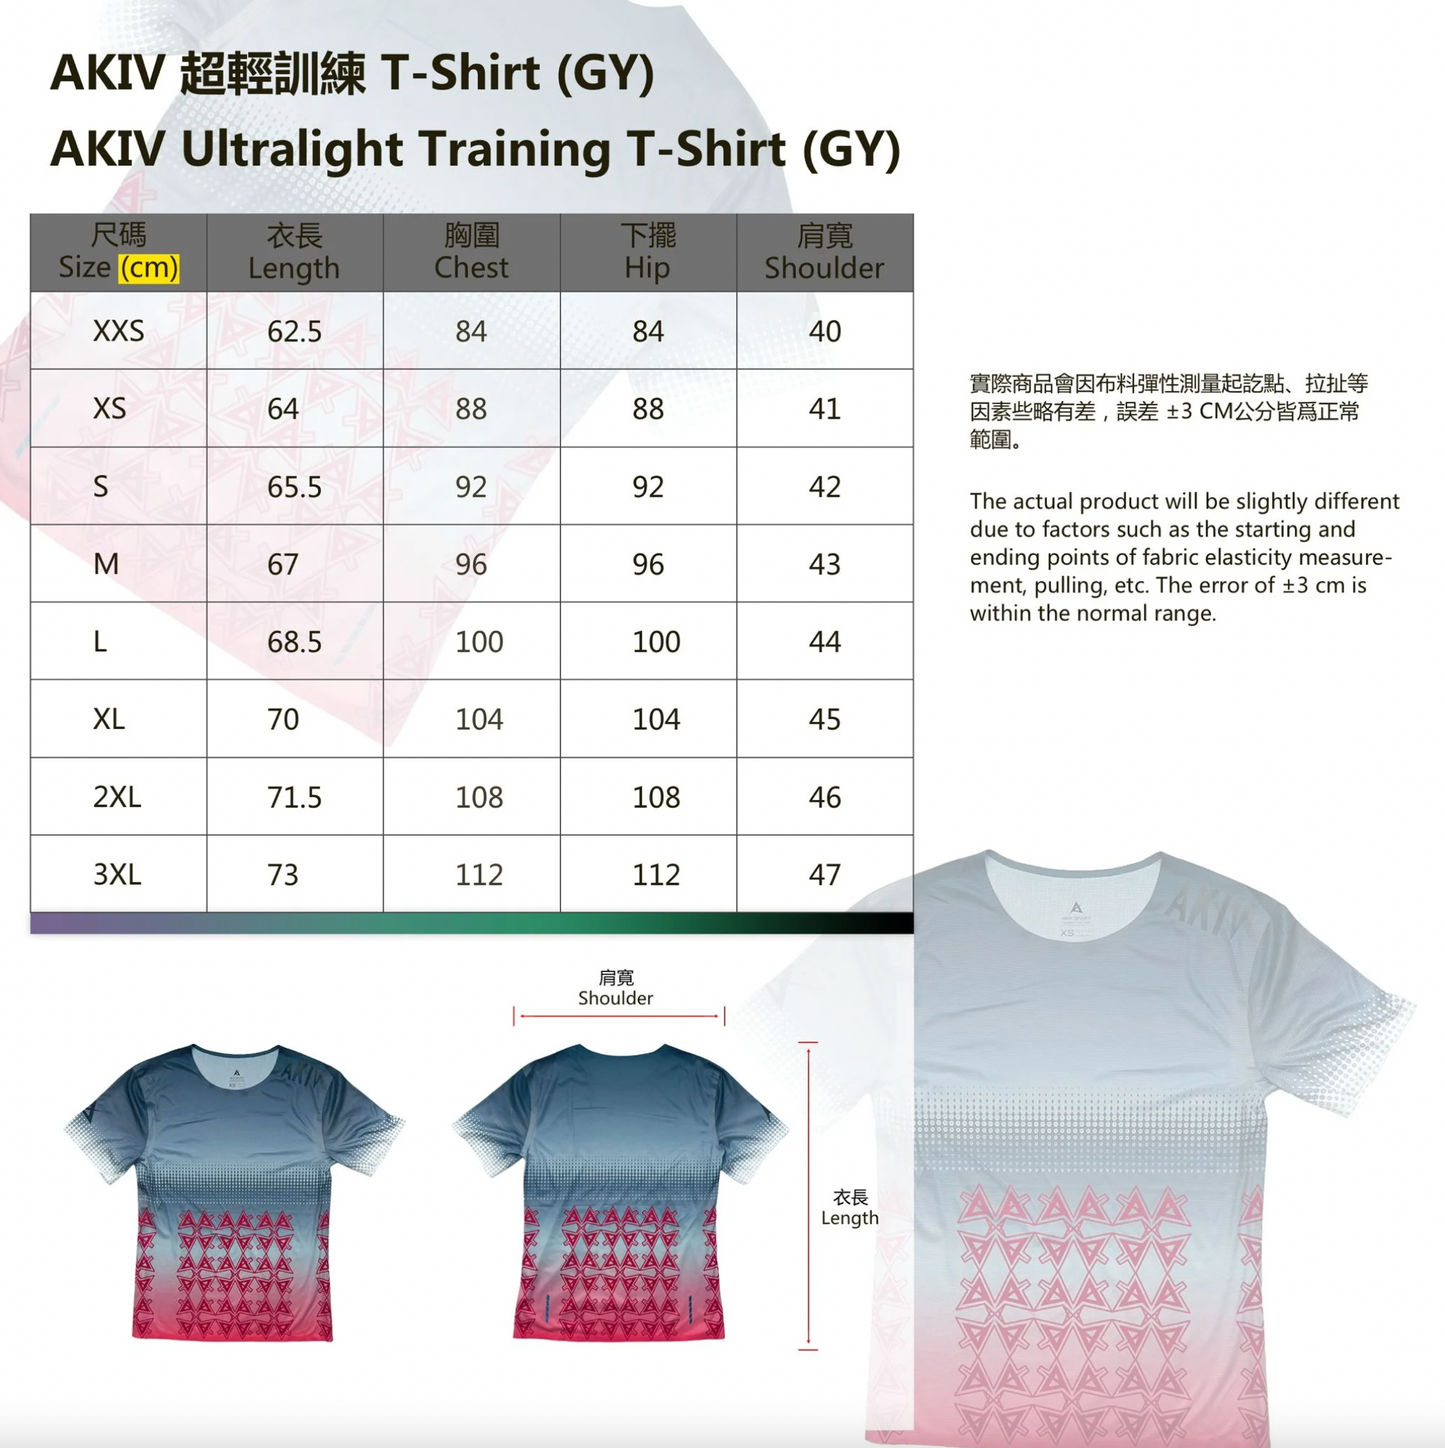 AKIV Ultralight Training T-Shirt (Gray)